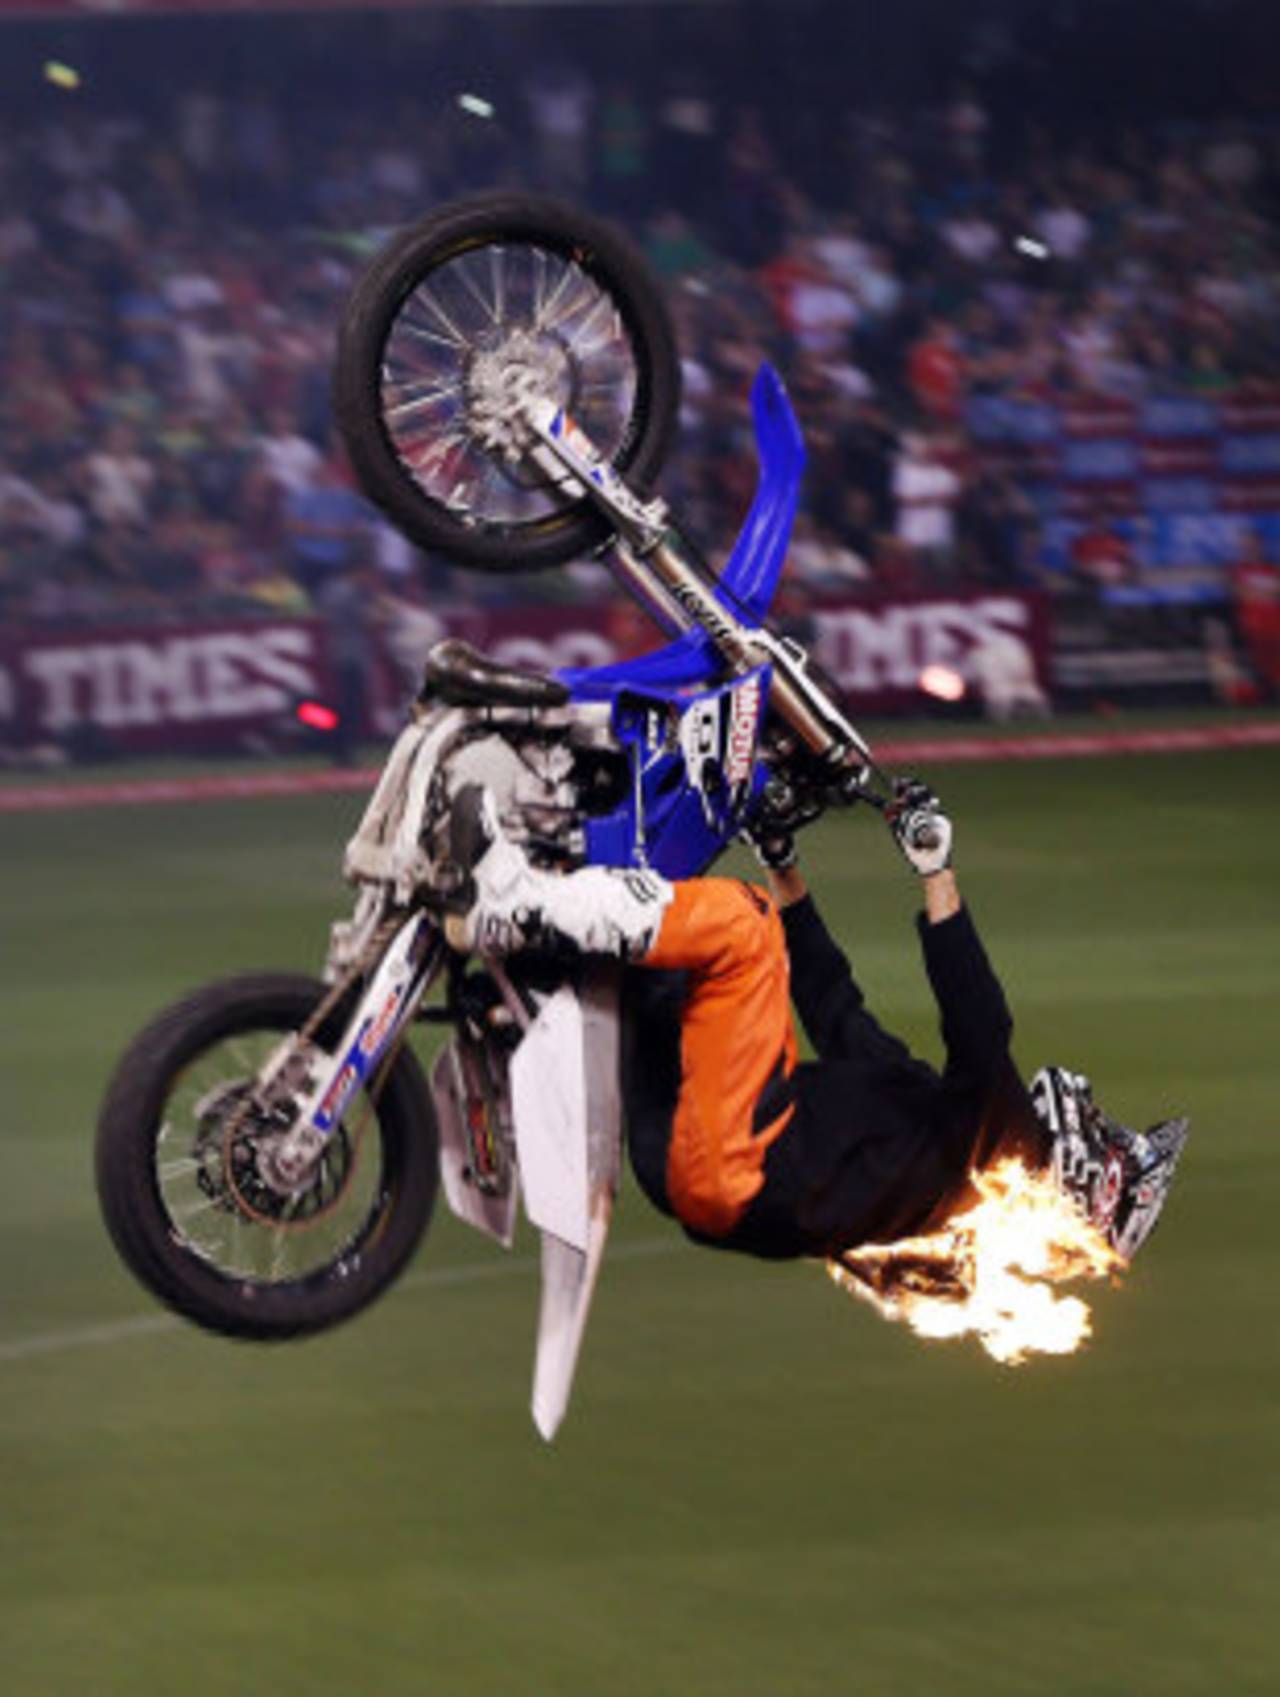 Motorcross stunts were part of the mid-innings entertainment&nbsp;&nbsp;&bull;&nbsp;&nbsp;Getty Images